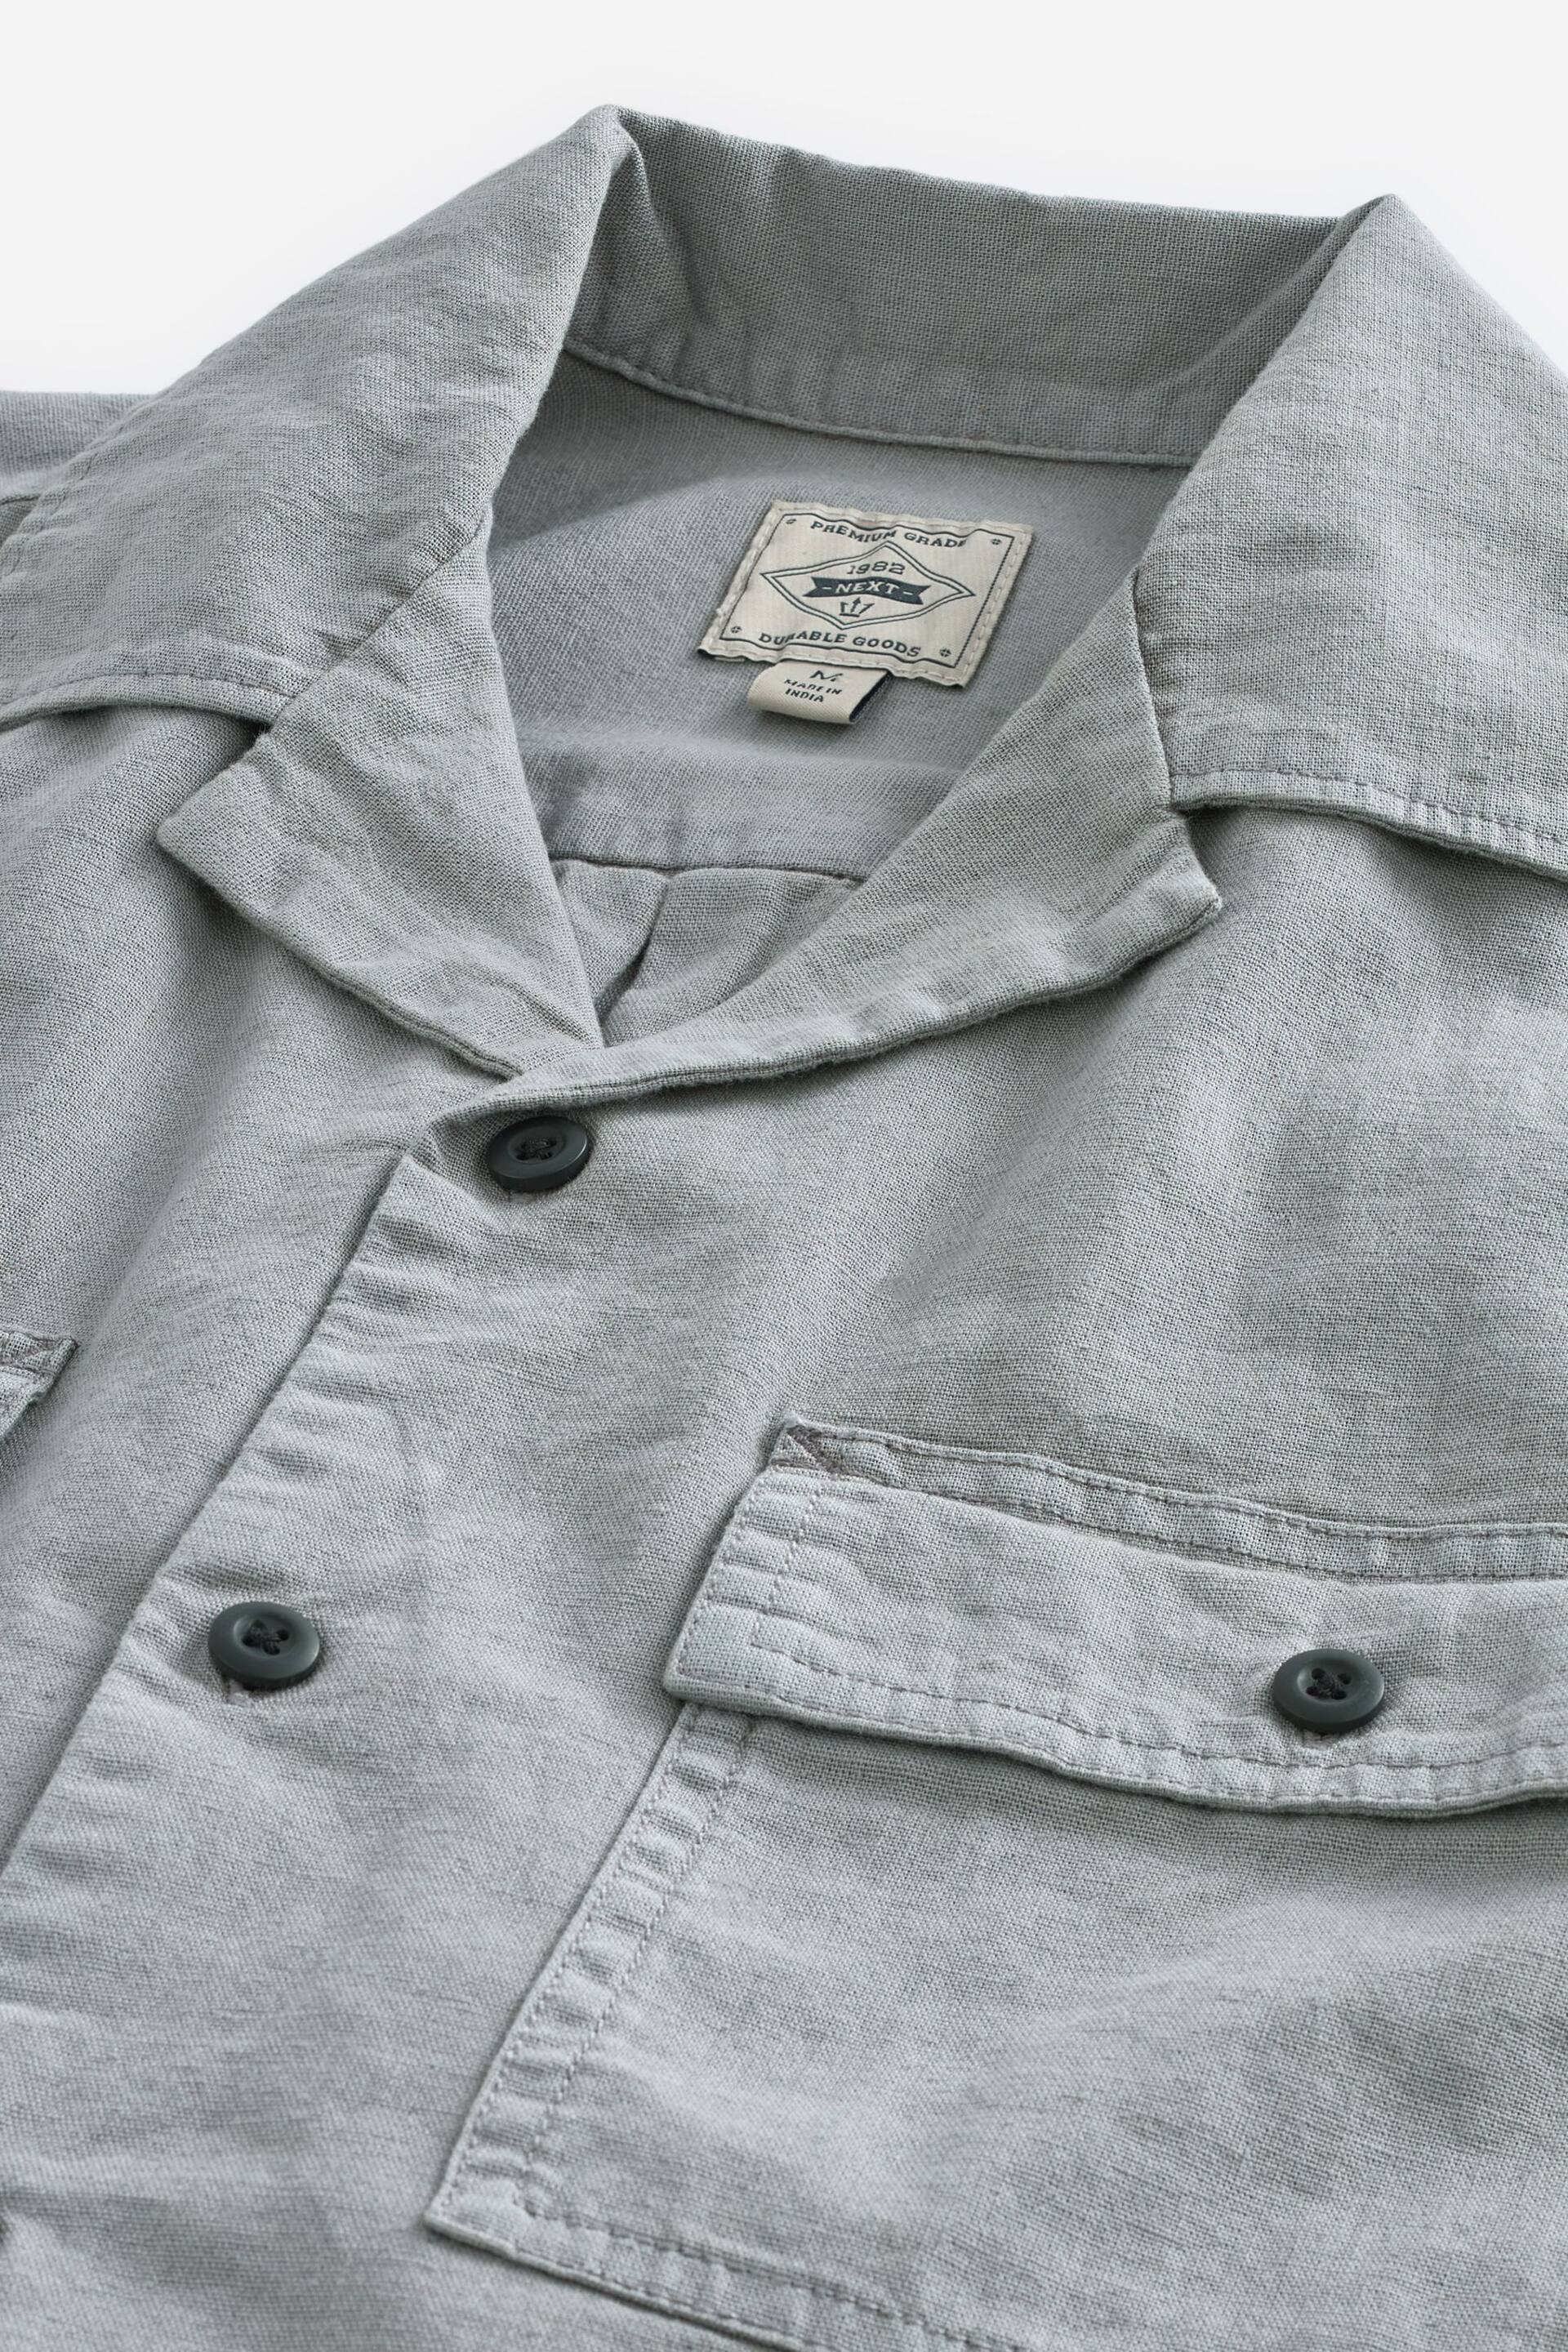 Grey Linen Blend Short Sleeve Shirt with Cuban Collar - Image 8 of 9